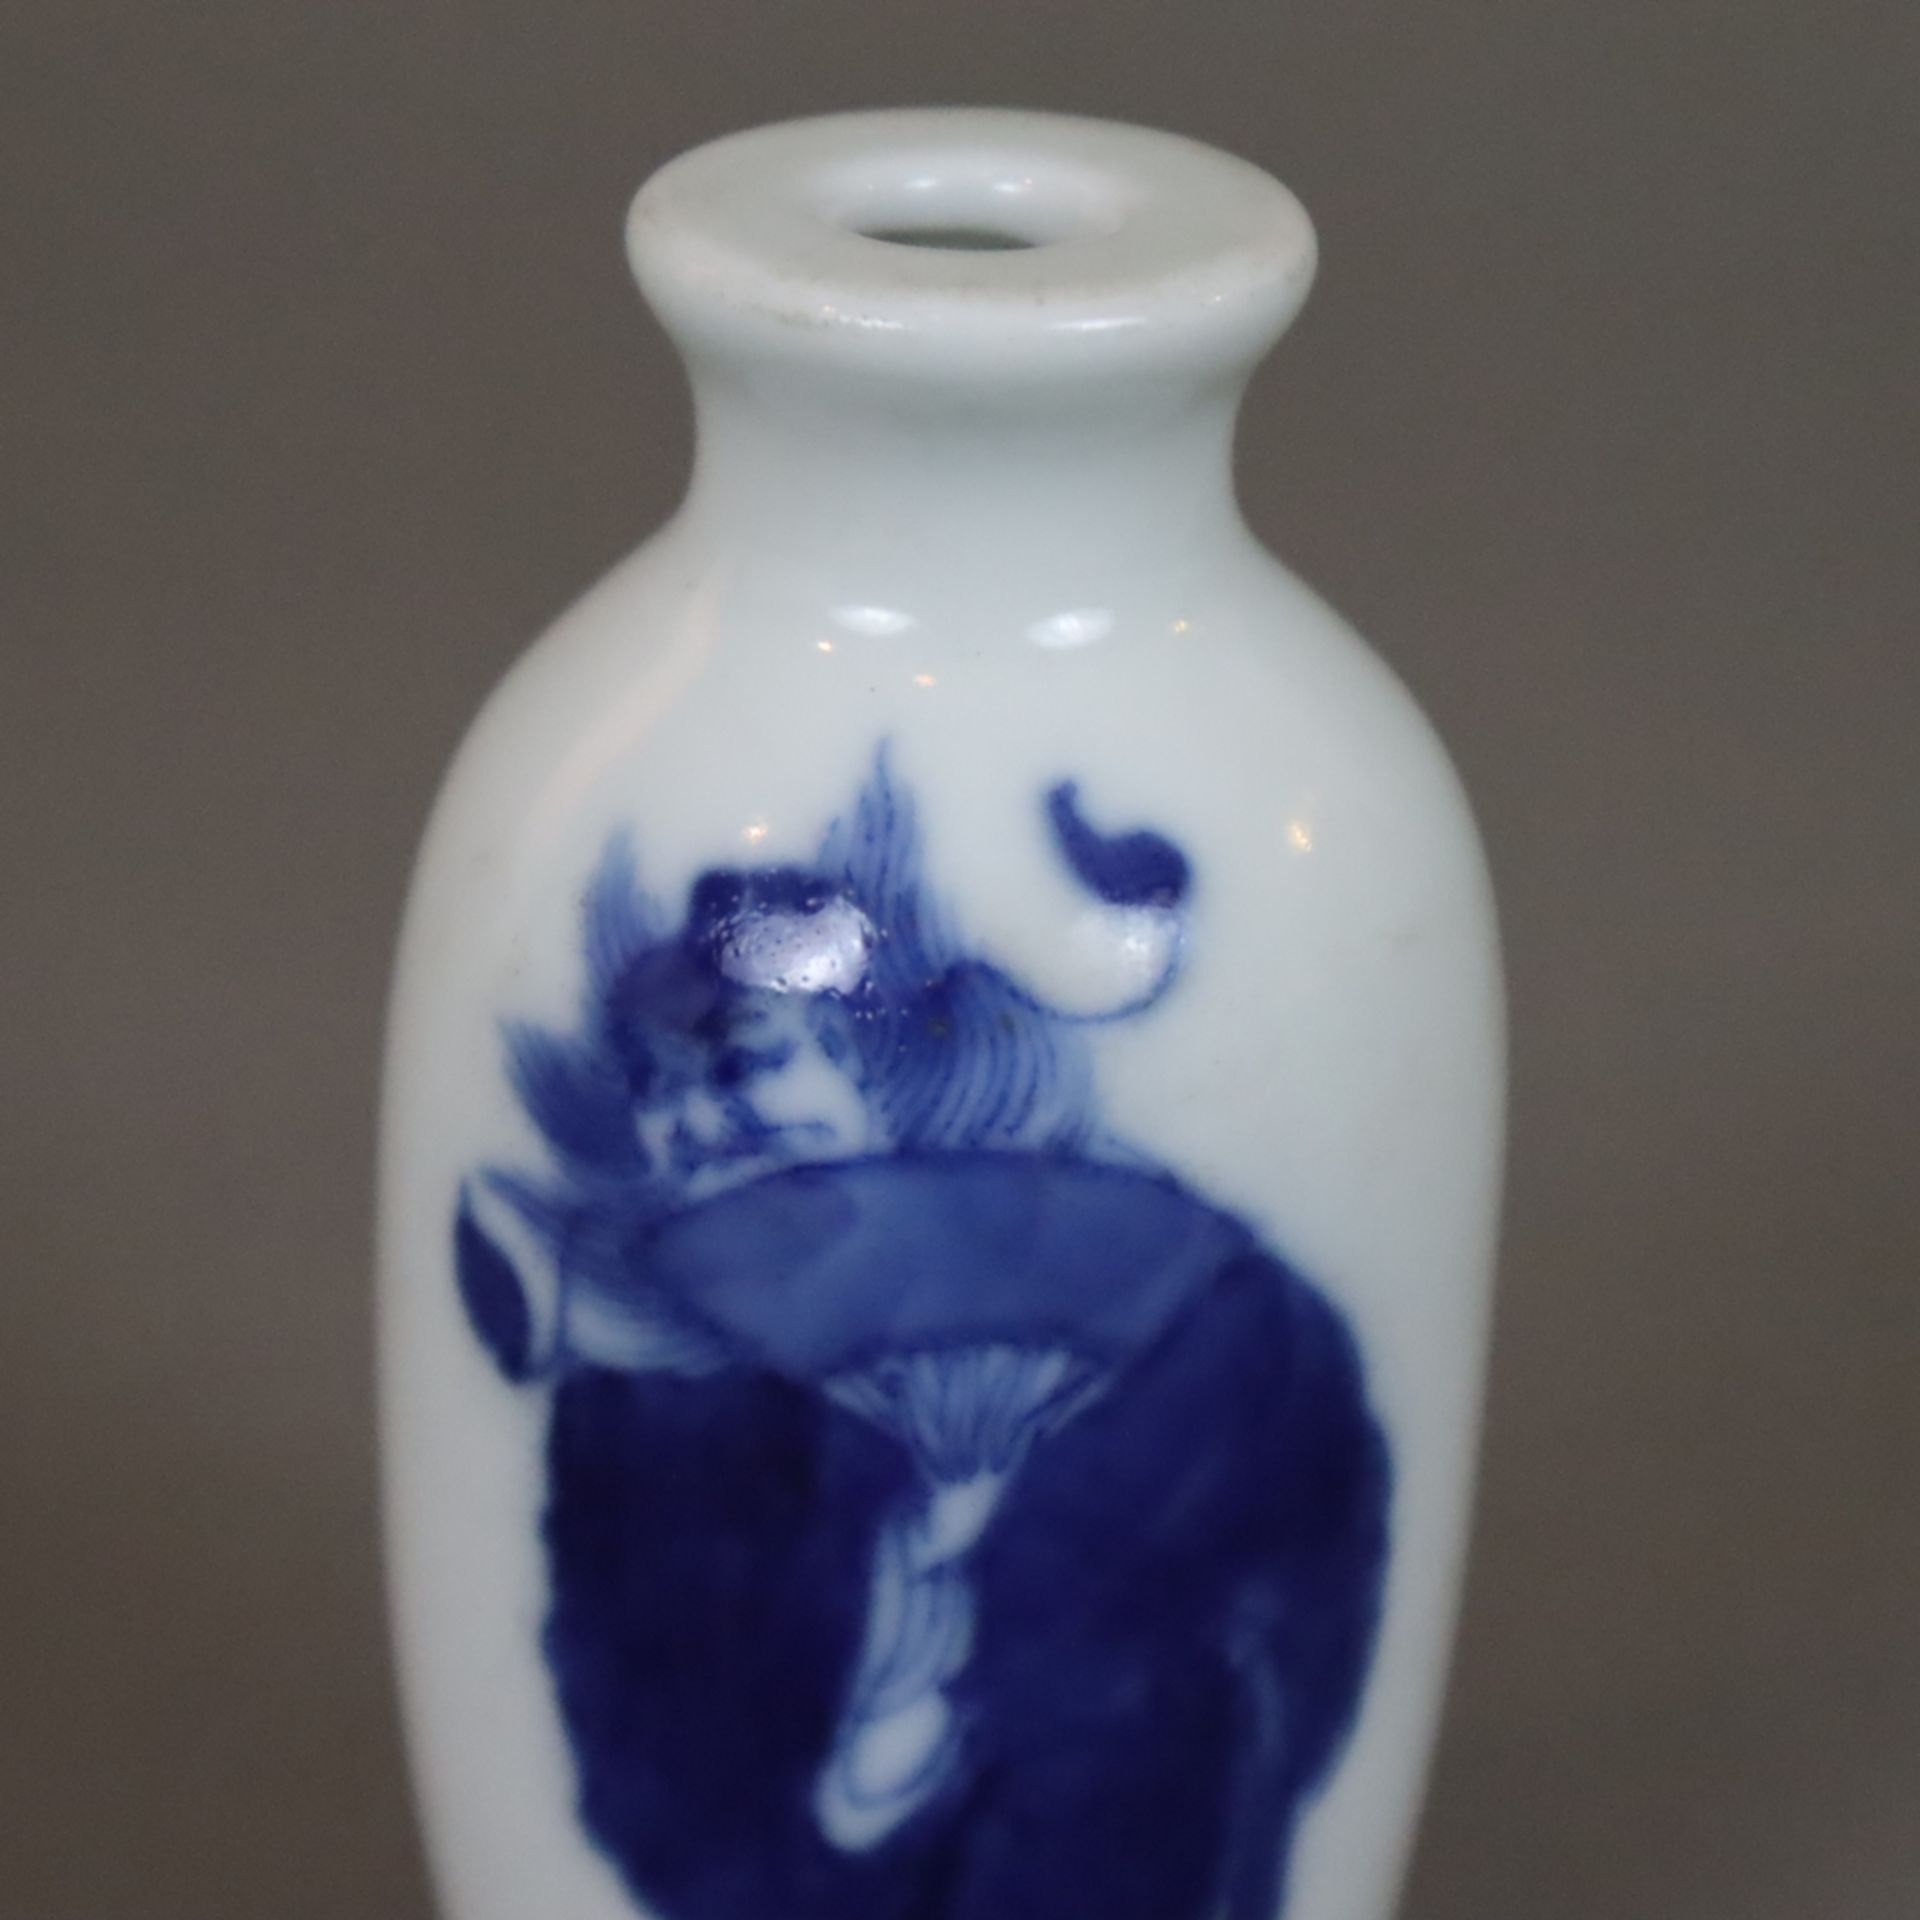 Snuffbottle - Porzellan in Unterglasurblau bemalt mit Dämonen-Bezwinger Zhong Kui, im Boden "Qianlo - Image 4 of 6